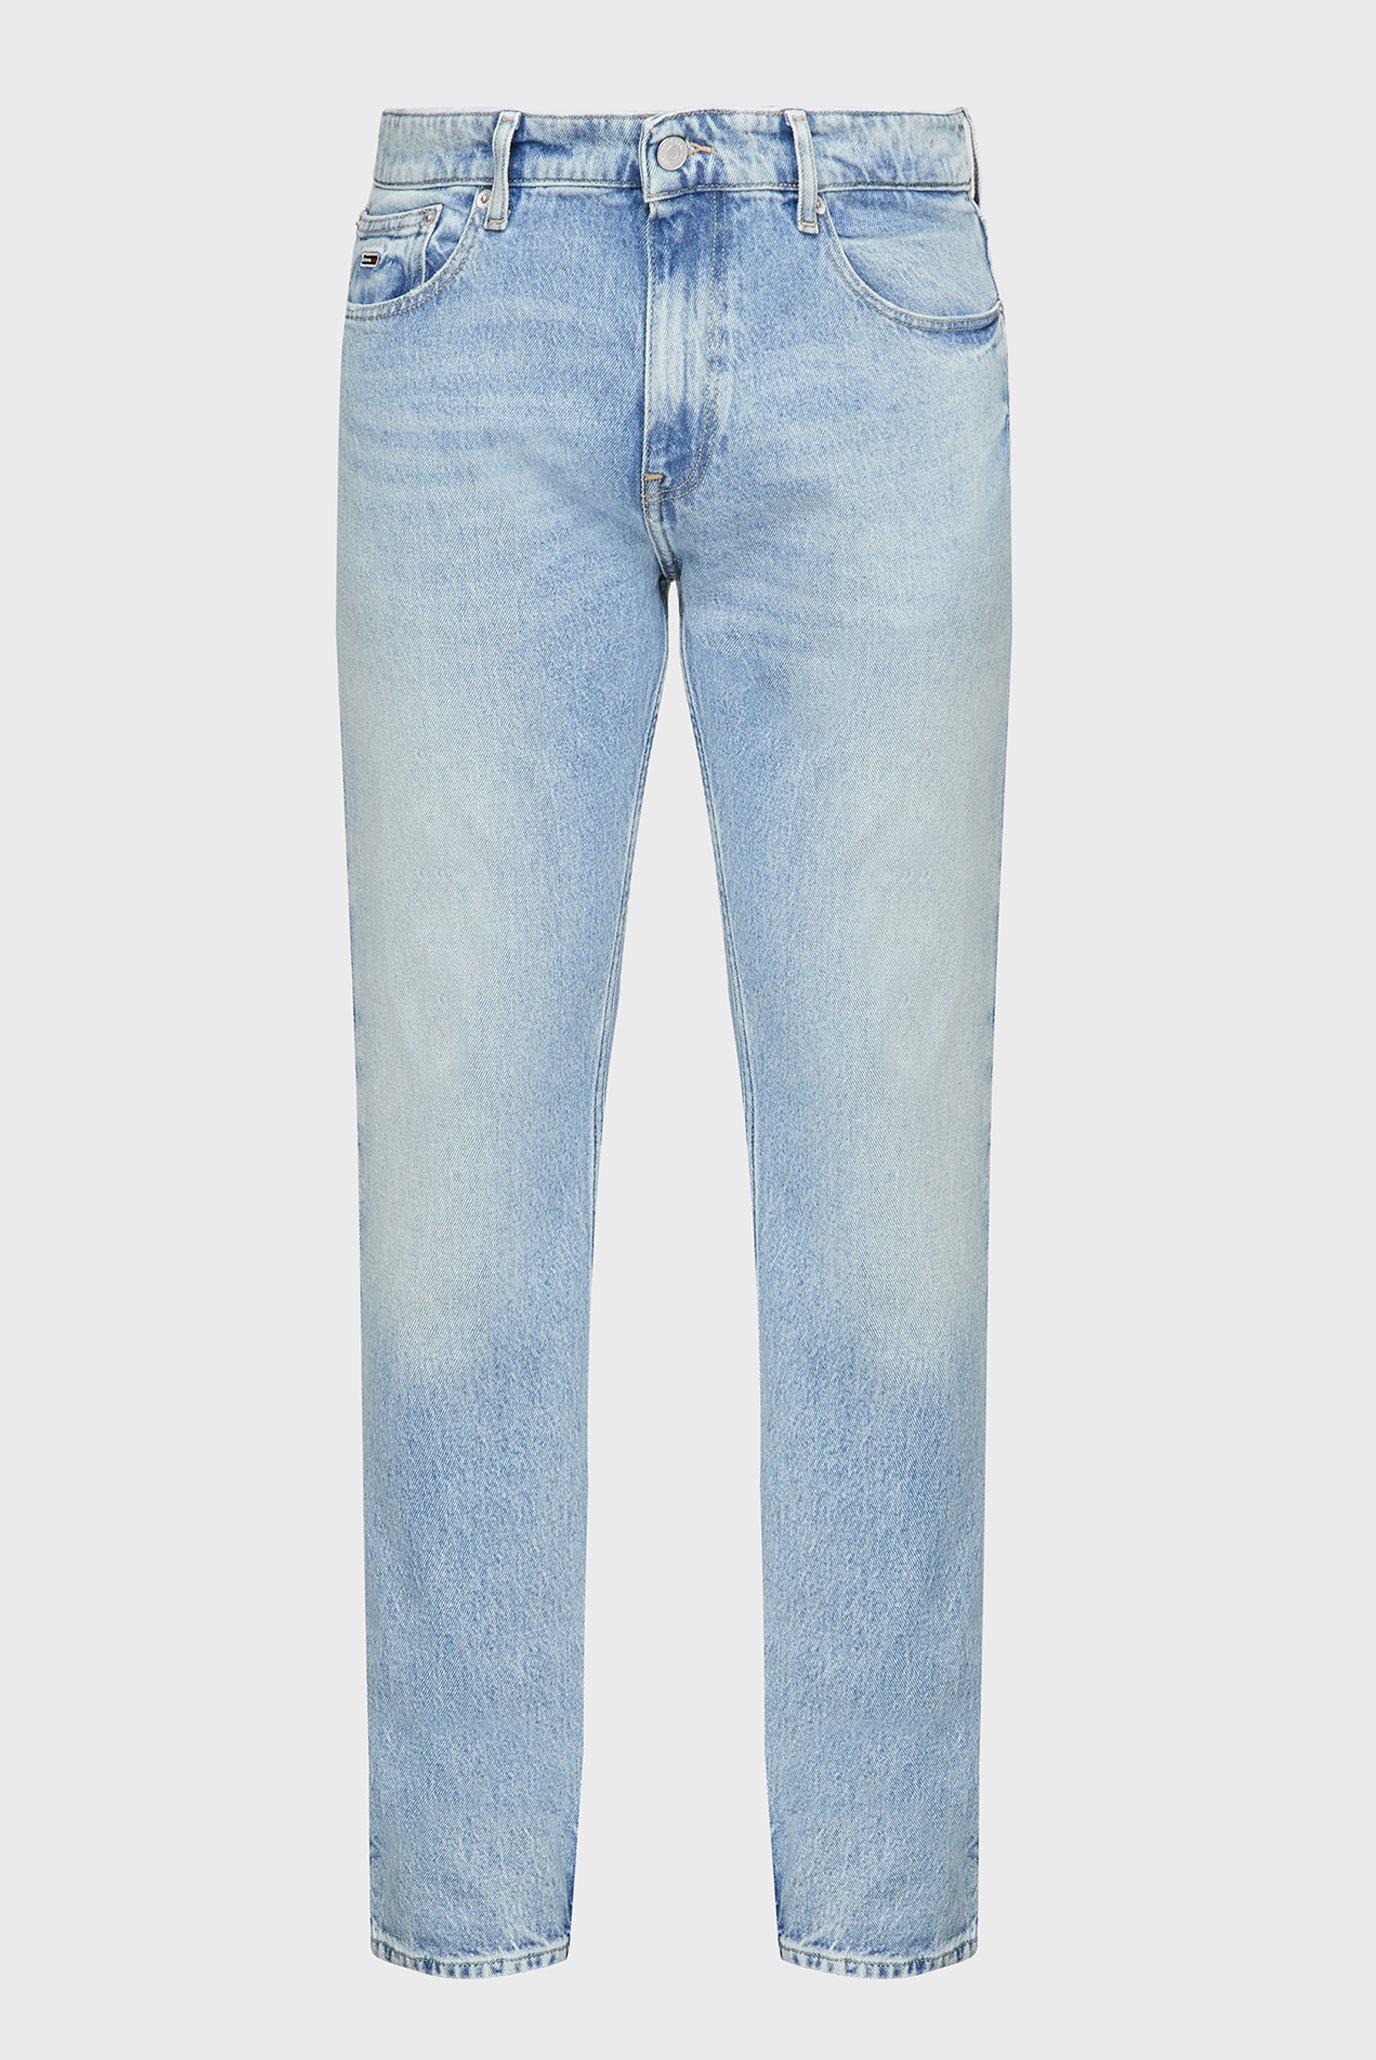 Мужские голубые джинсы RYAN RGLR STRGHT AG6118 1